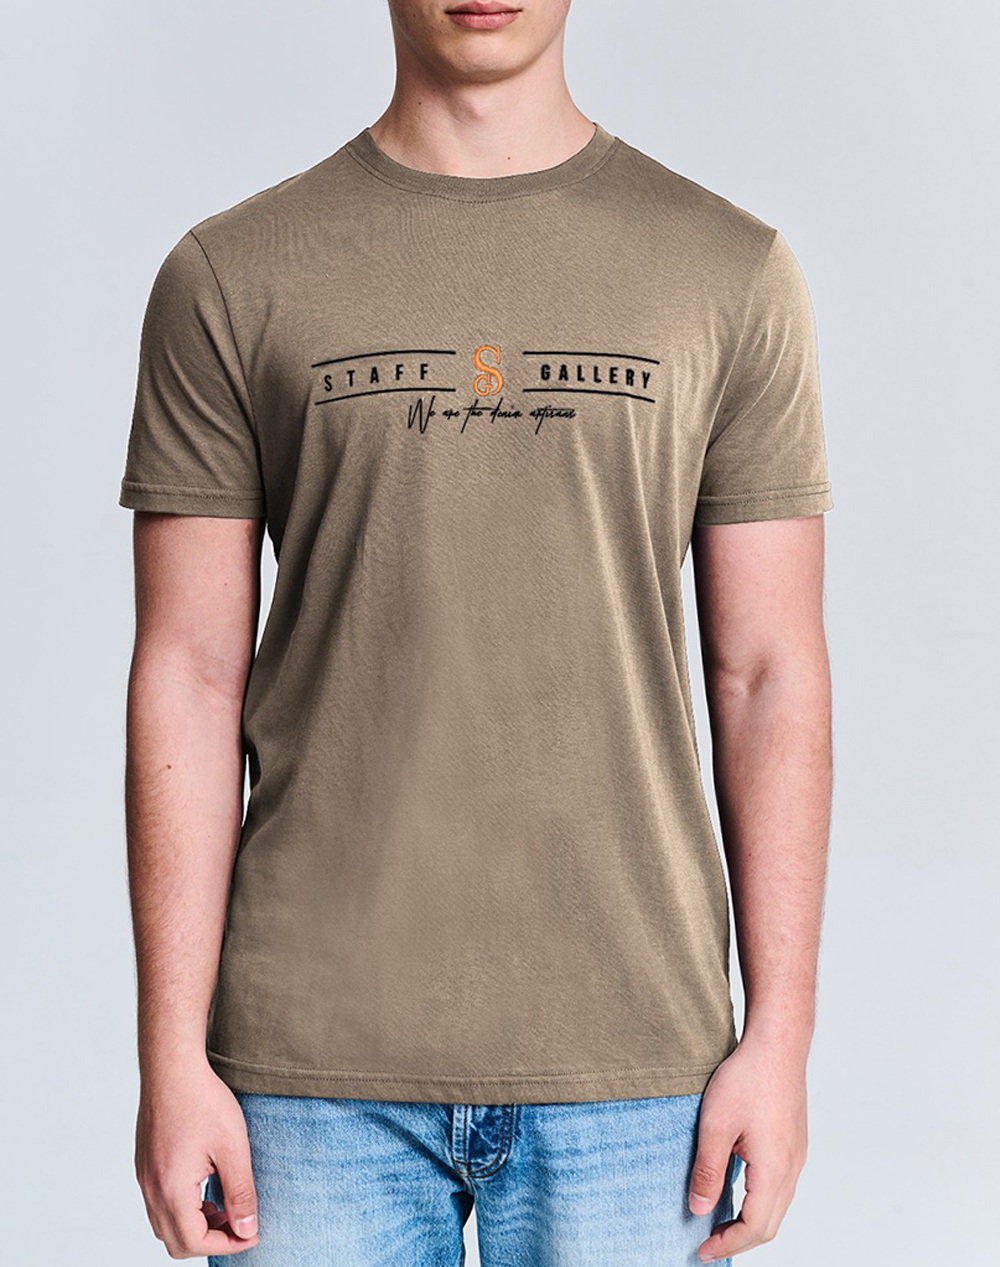 STAFF Man T-Shirt Short Sleeve 100% Co 64-055.051-Ν0151 Khaki